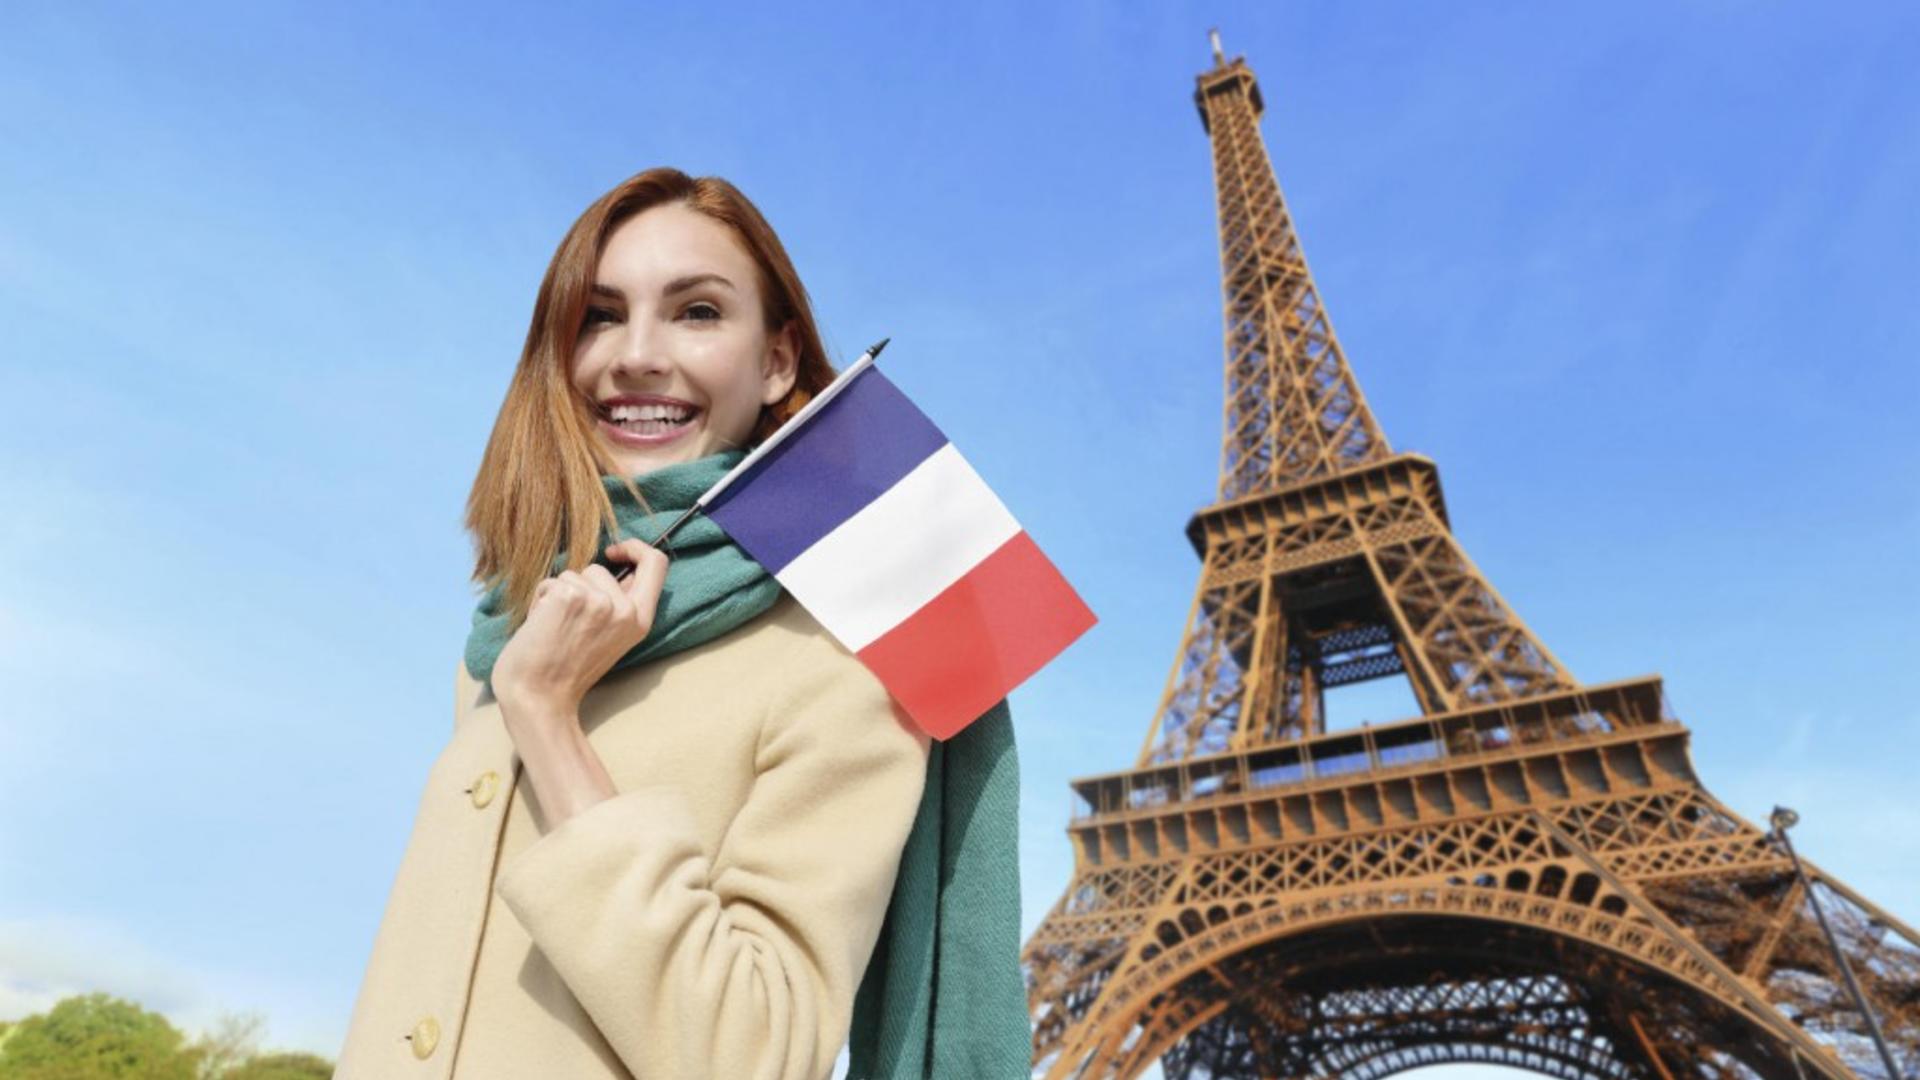 She s french. Девушки Франции. Французский язык. Девушка с флагом Франции. Франция люди.